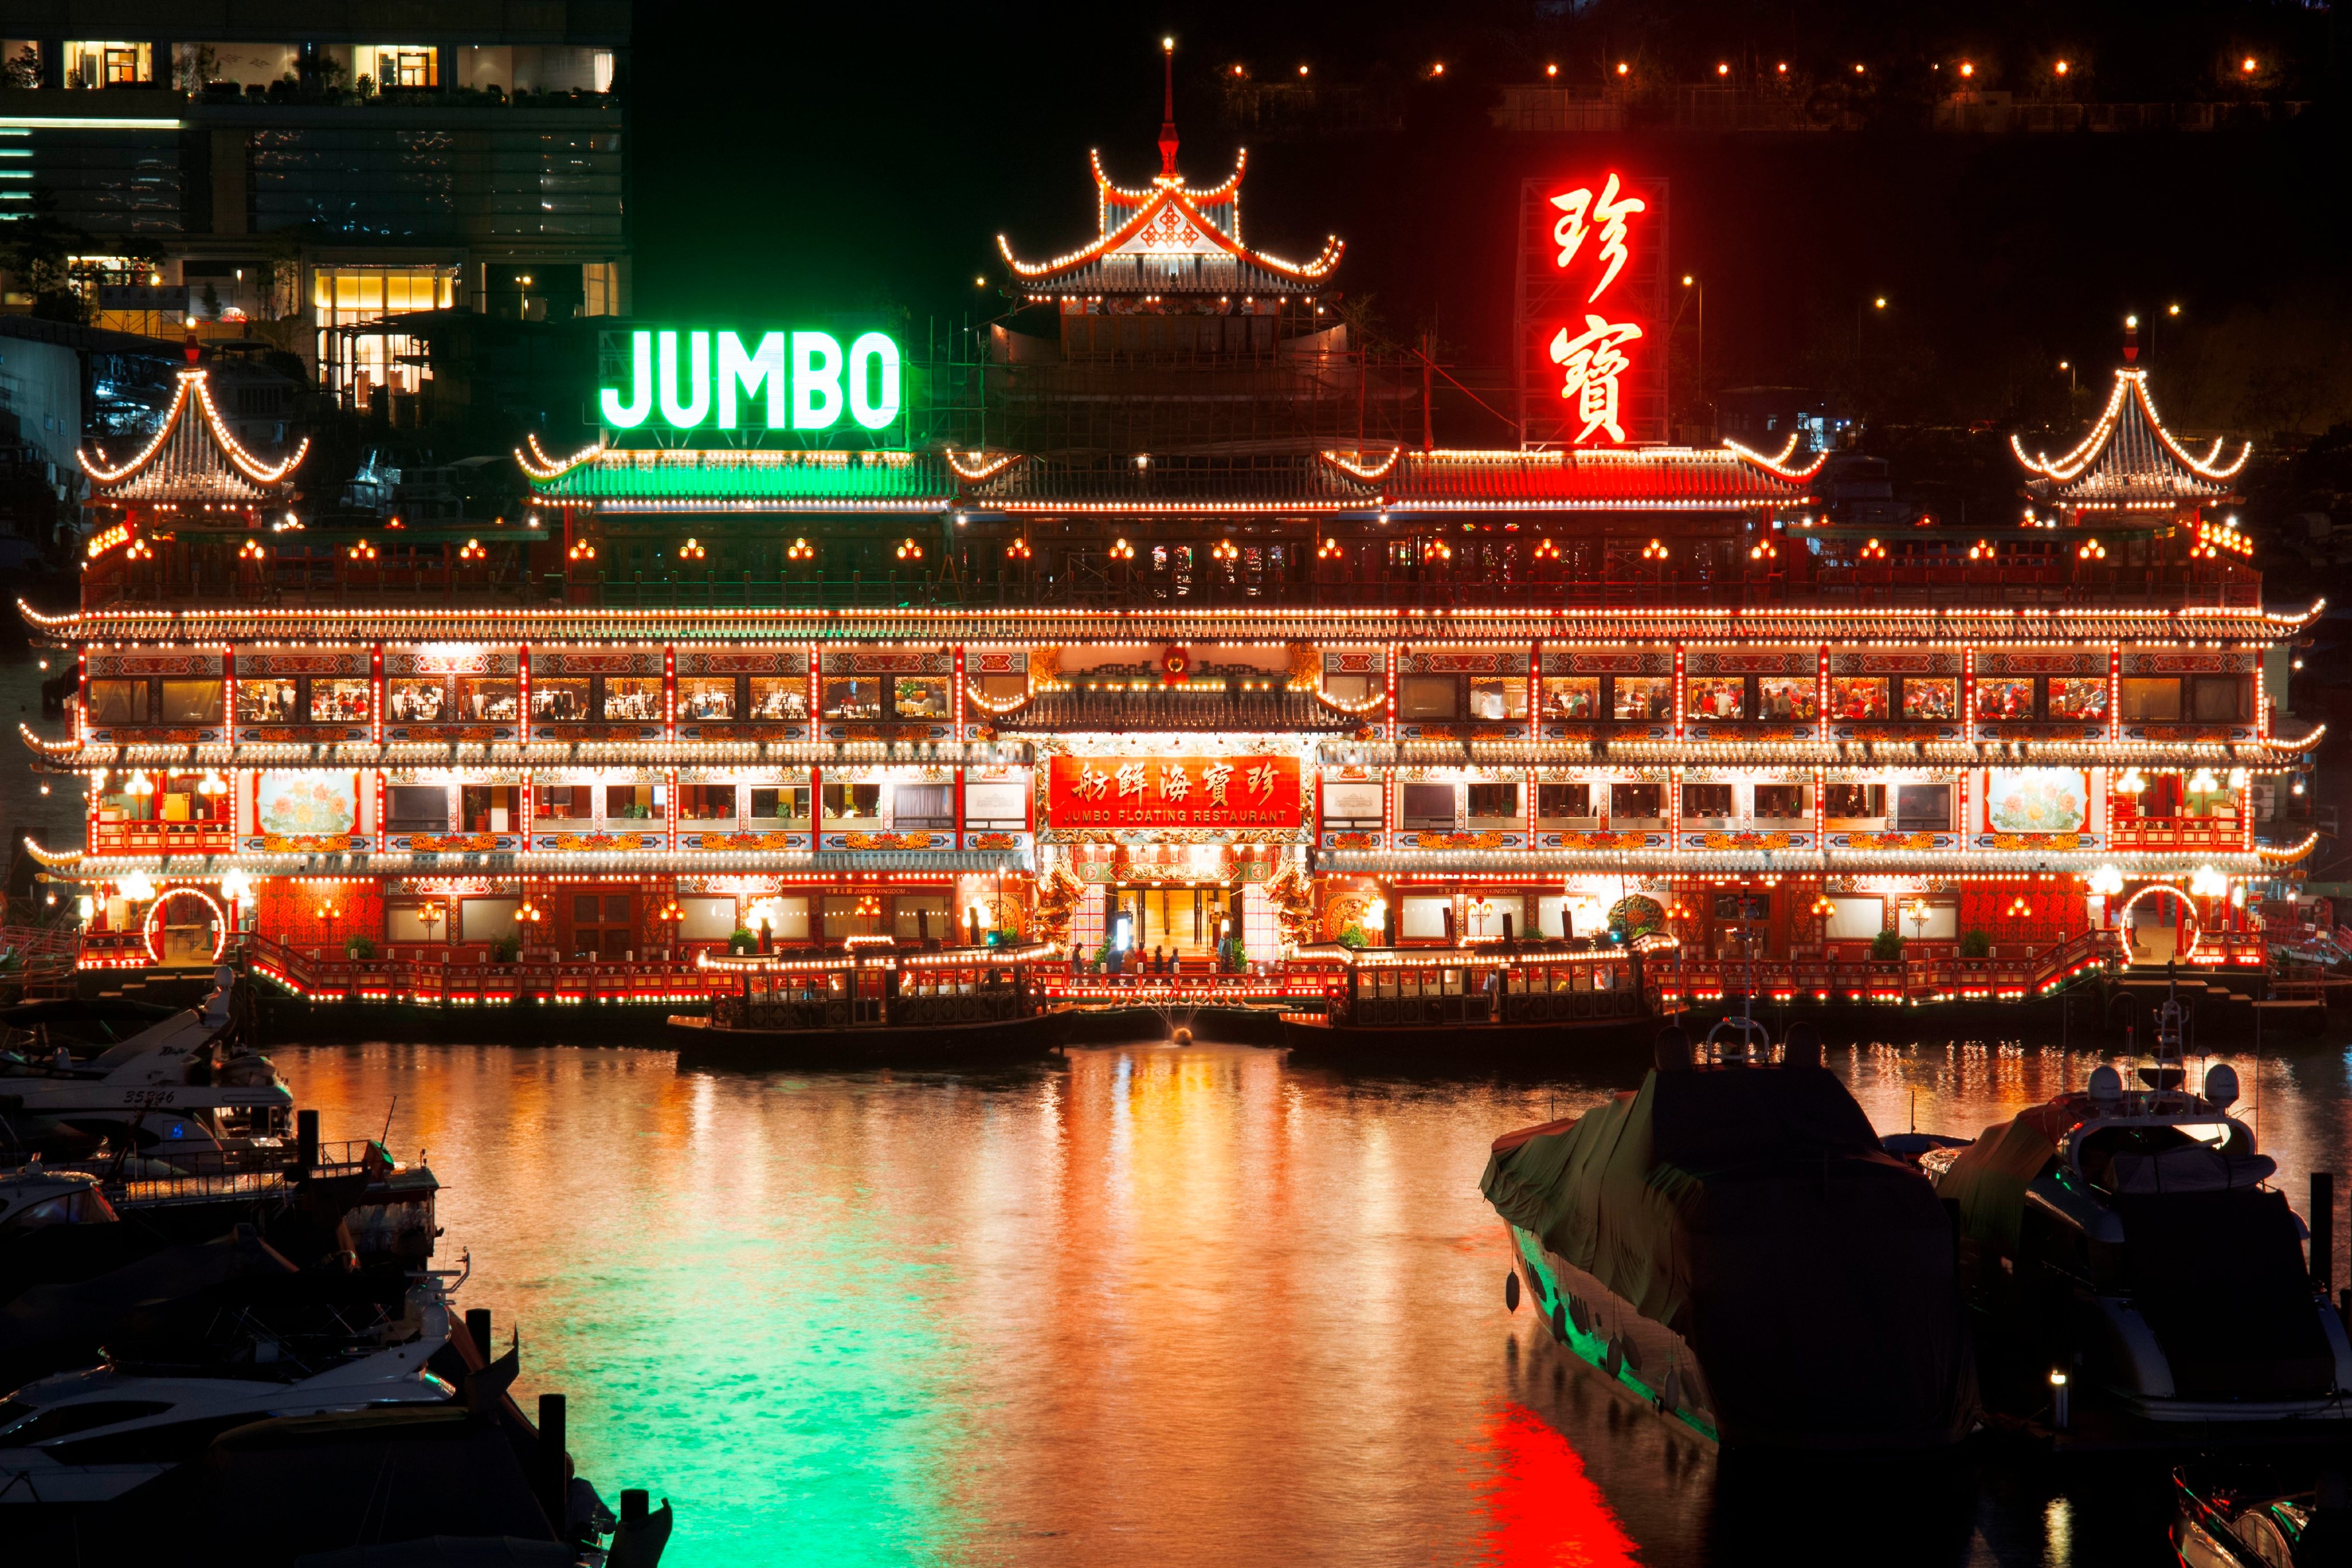 The Jumbo floating restaurant, Aberdeen, Hong Kong, China.